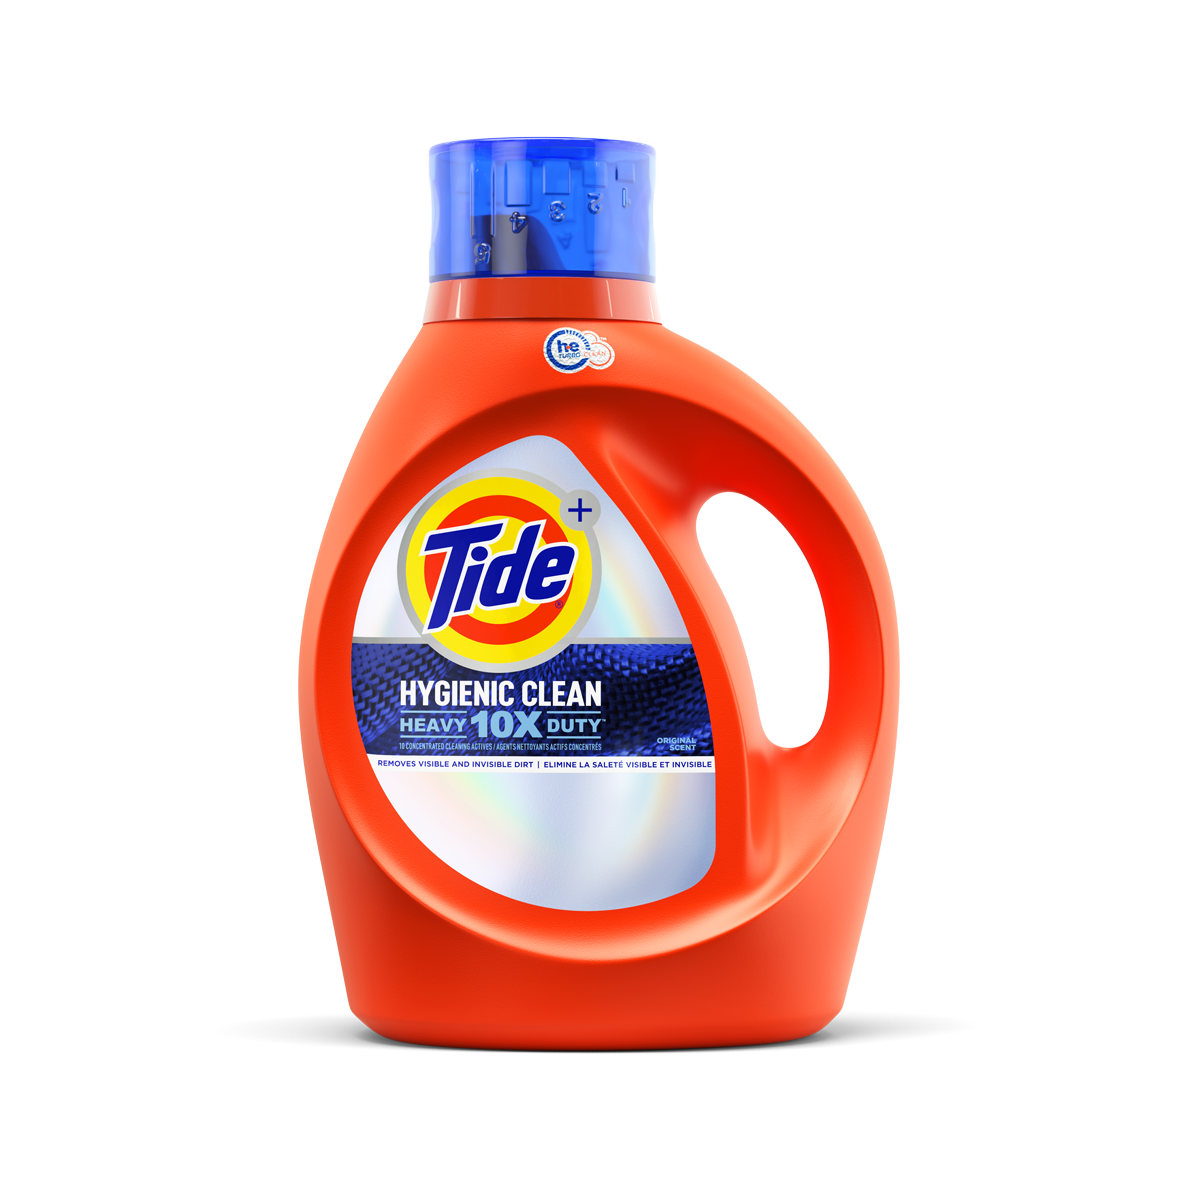 Tide Hygienic Clean Heavy Duty 10x Liquid Detergent Original Scent